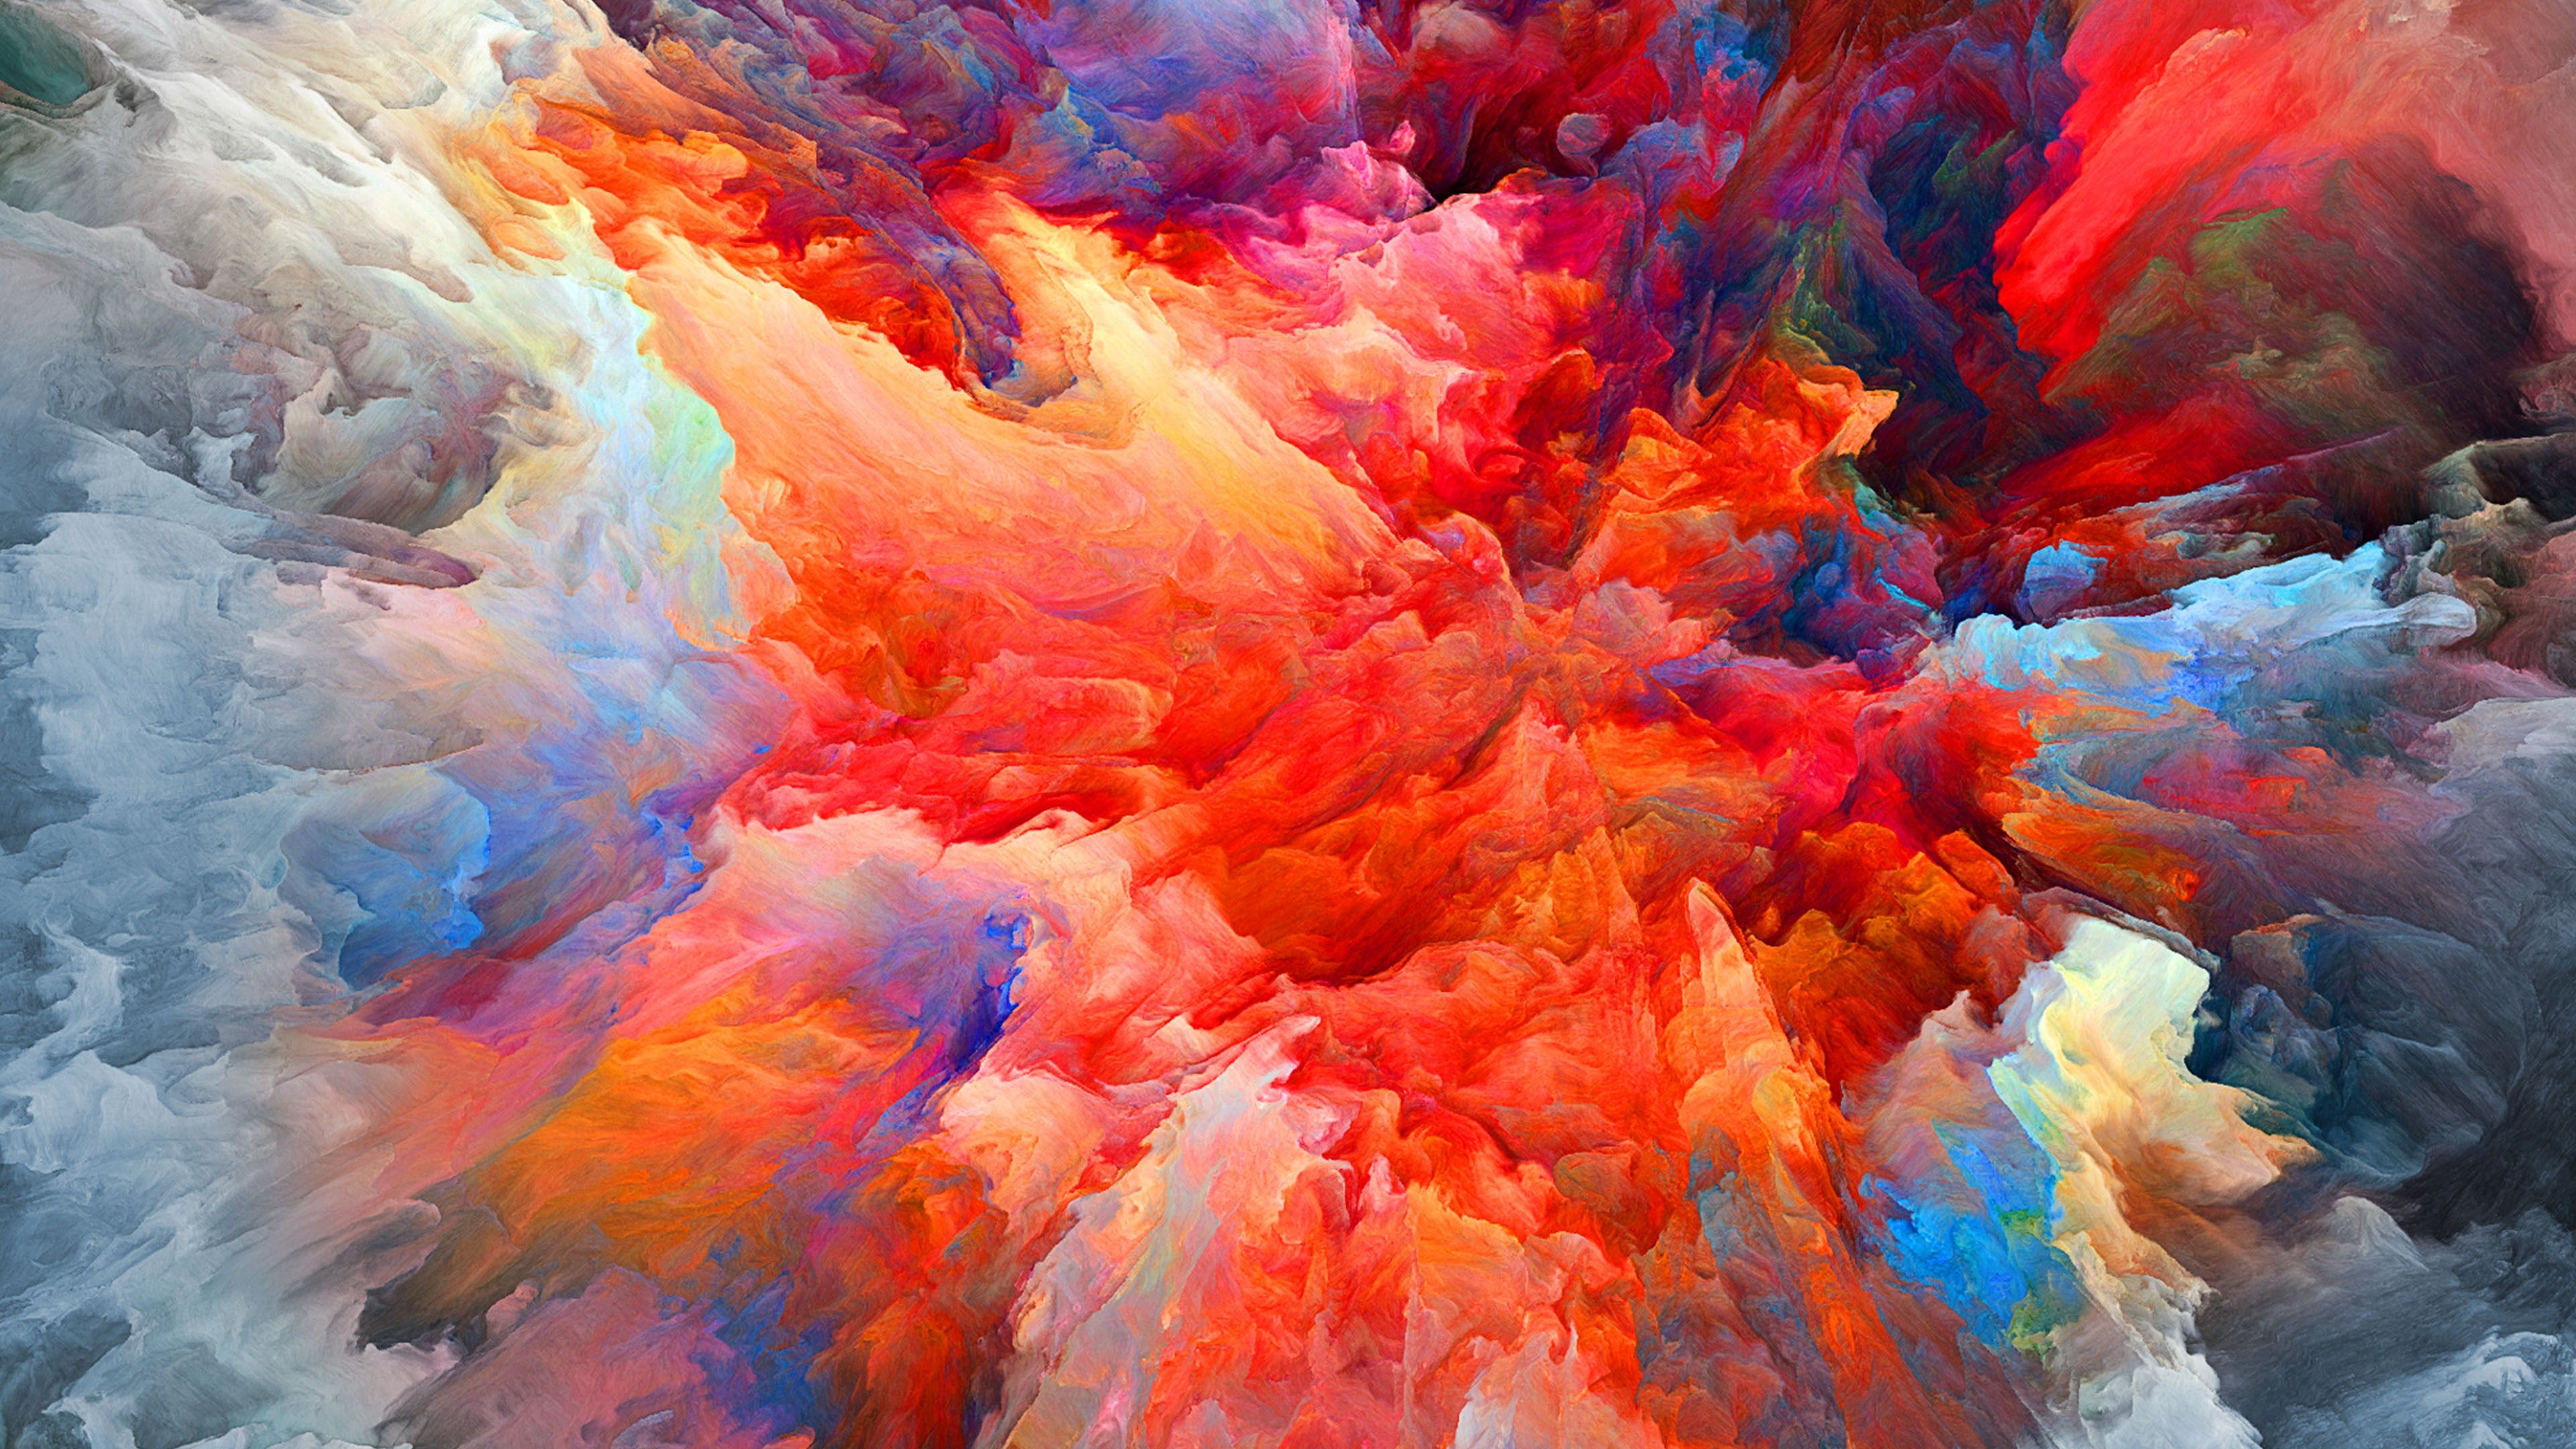 Colorful Blast of Smoke 4k Ultra HD Wallpaper. Background Image